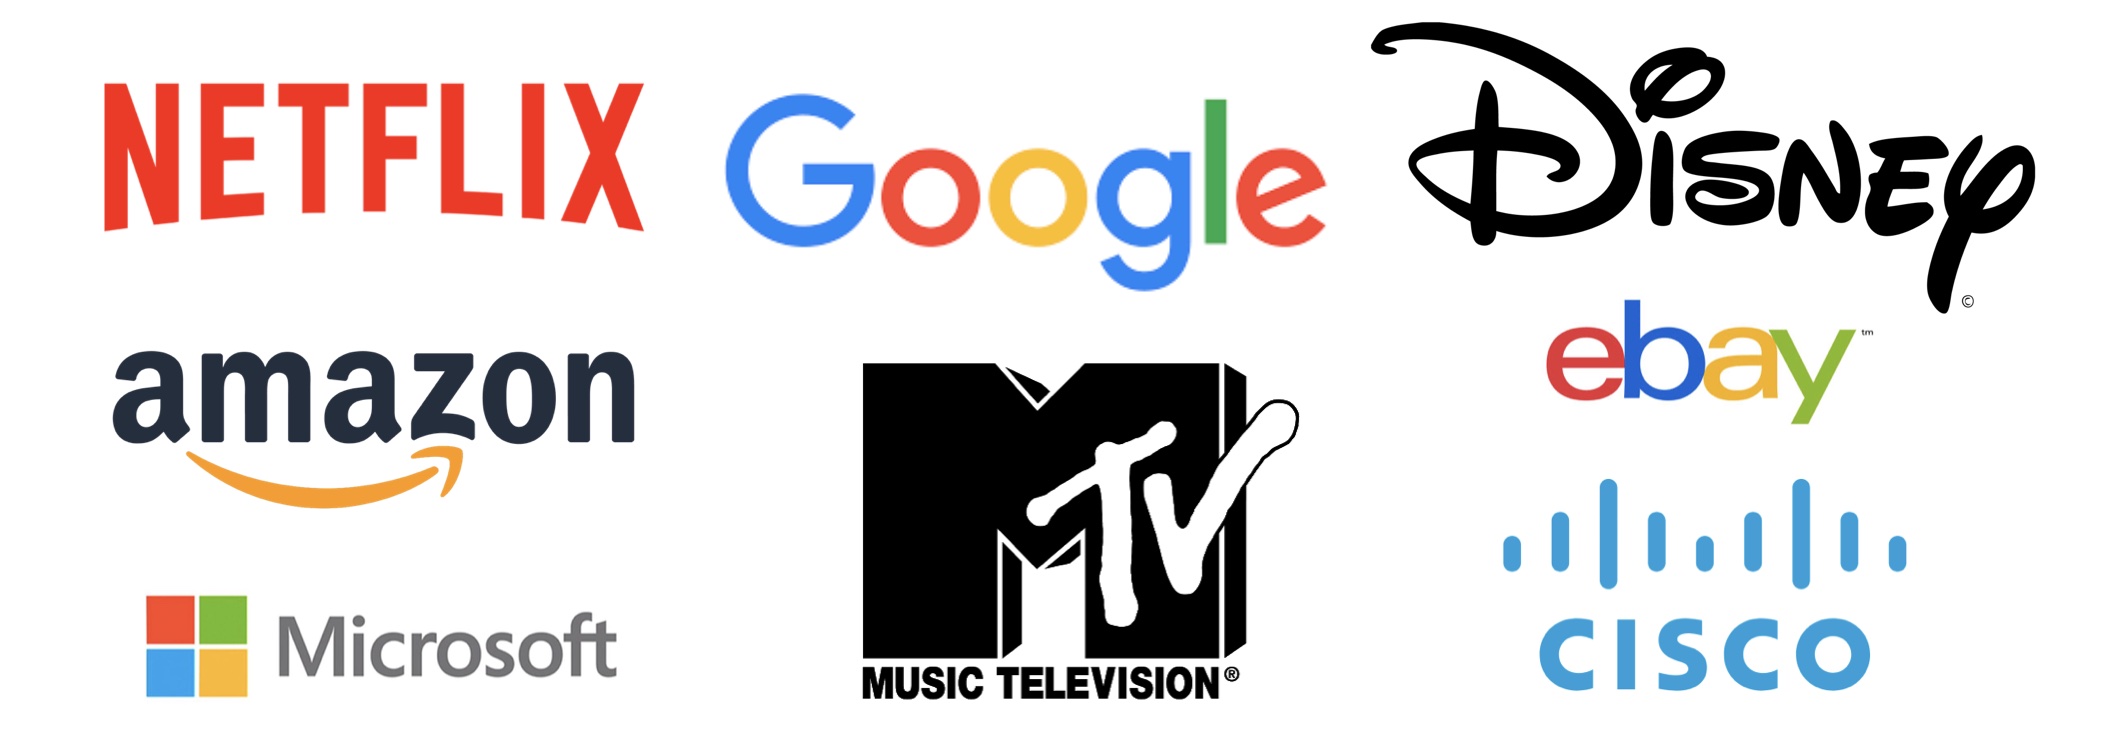 Corporate logos for Netflix, Disney, Google, Microsoft, ebay, Cisco, MTV and Amazon